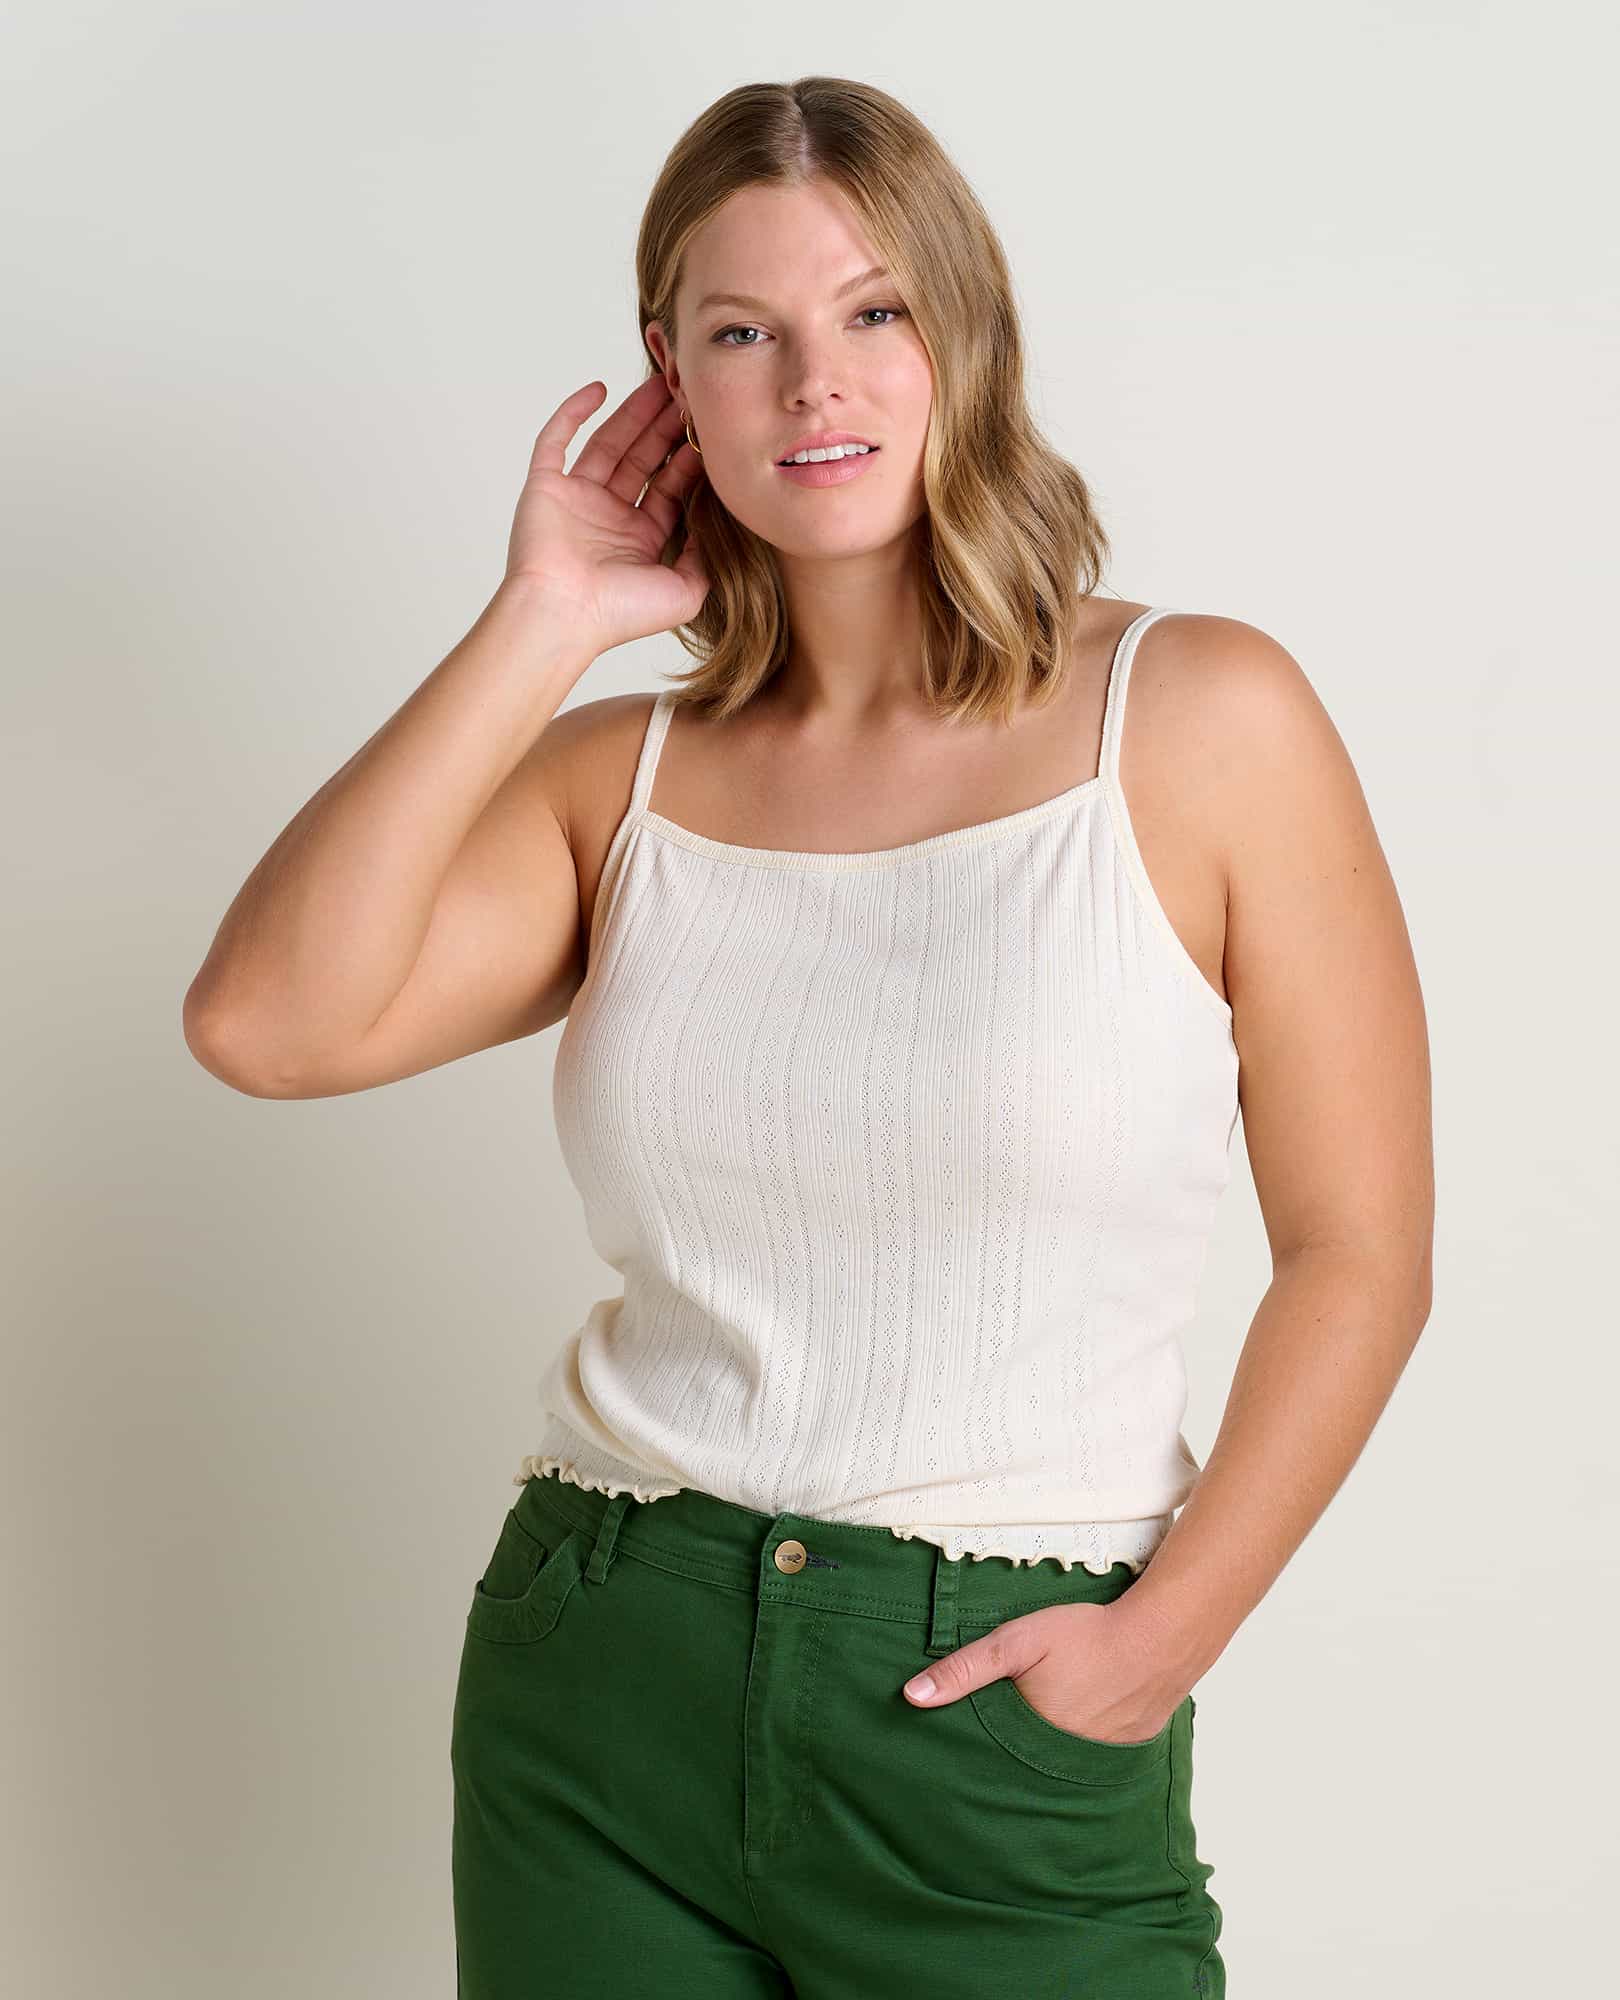 Short Sleeved Organic Cotton Pointelle Tee Shirt [Pointelle T-shirt